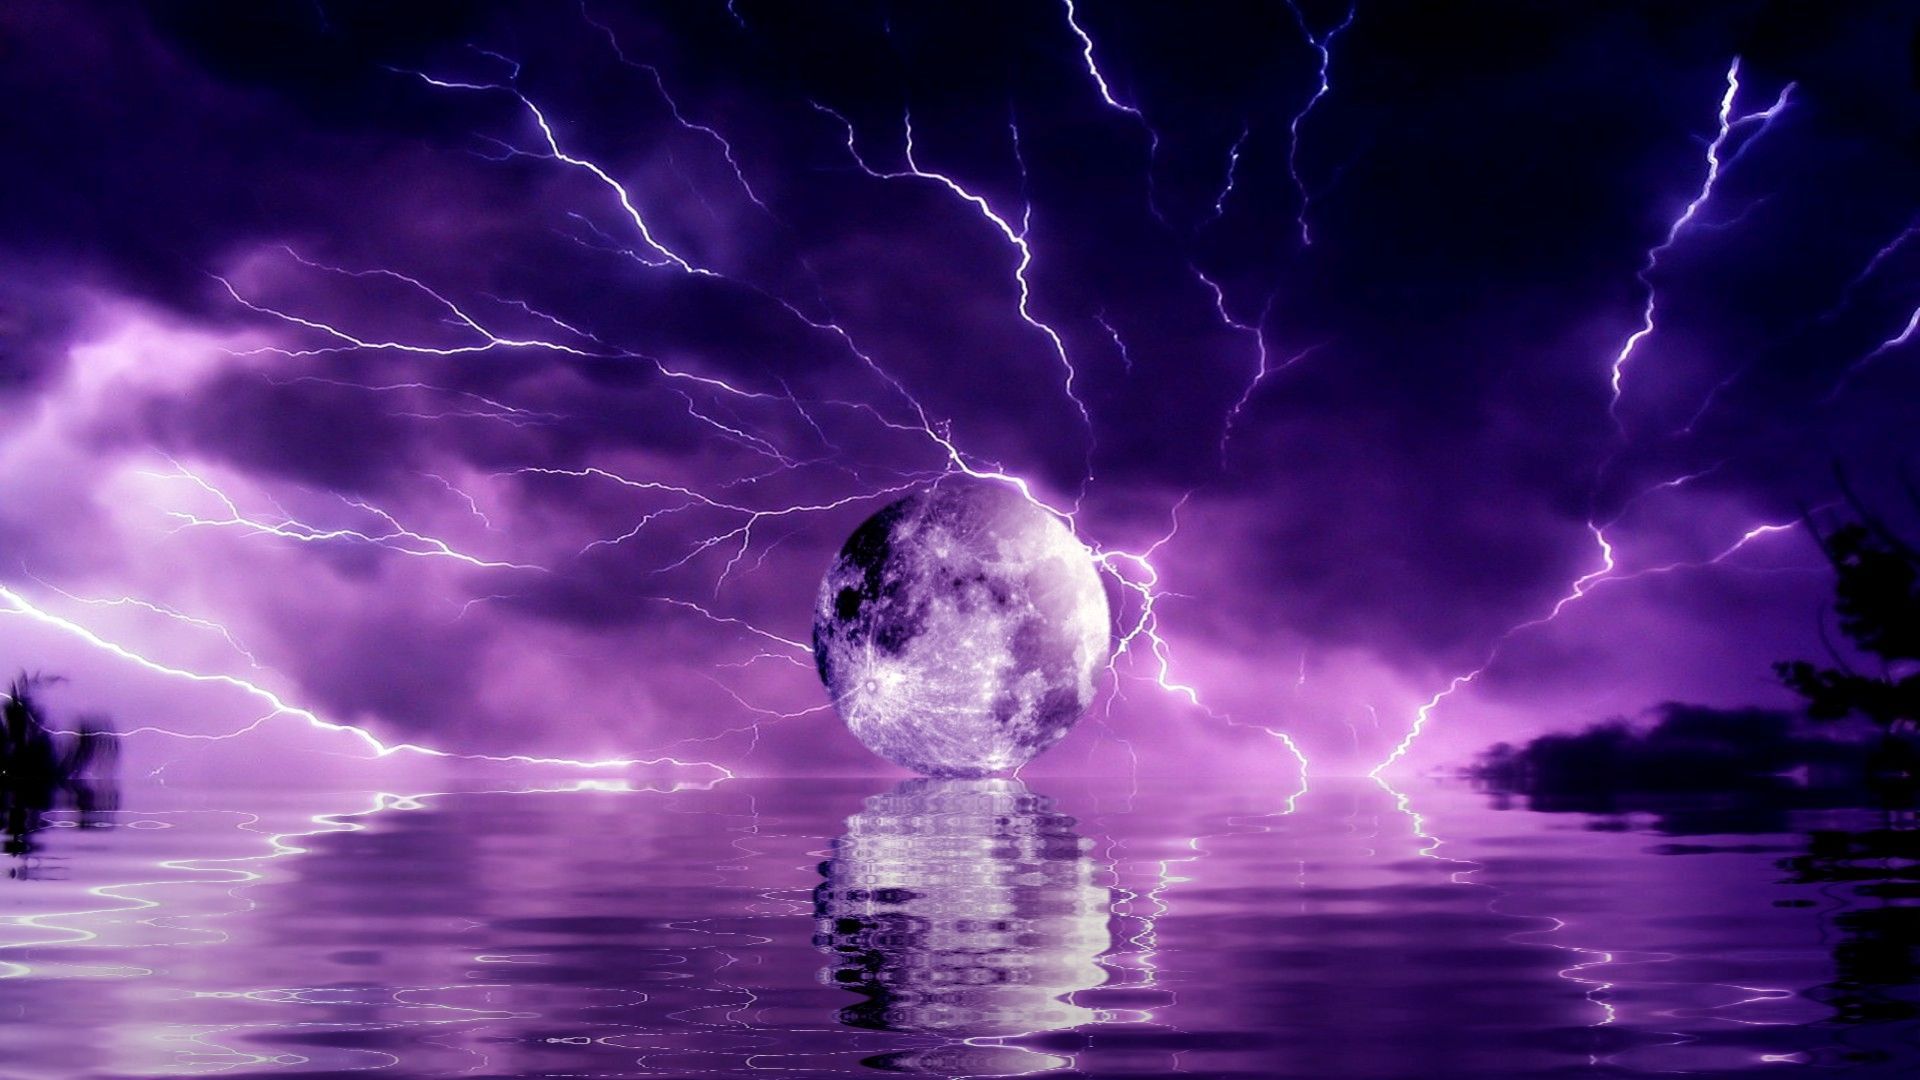 Fantasy Purple Storm. Storm wallpaper, Animation